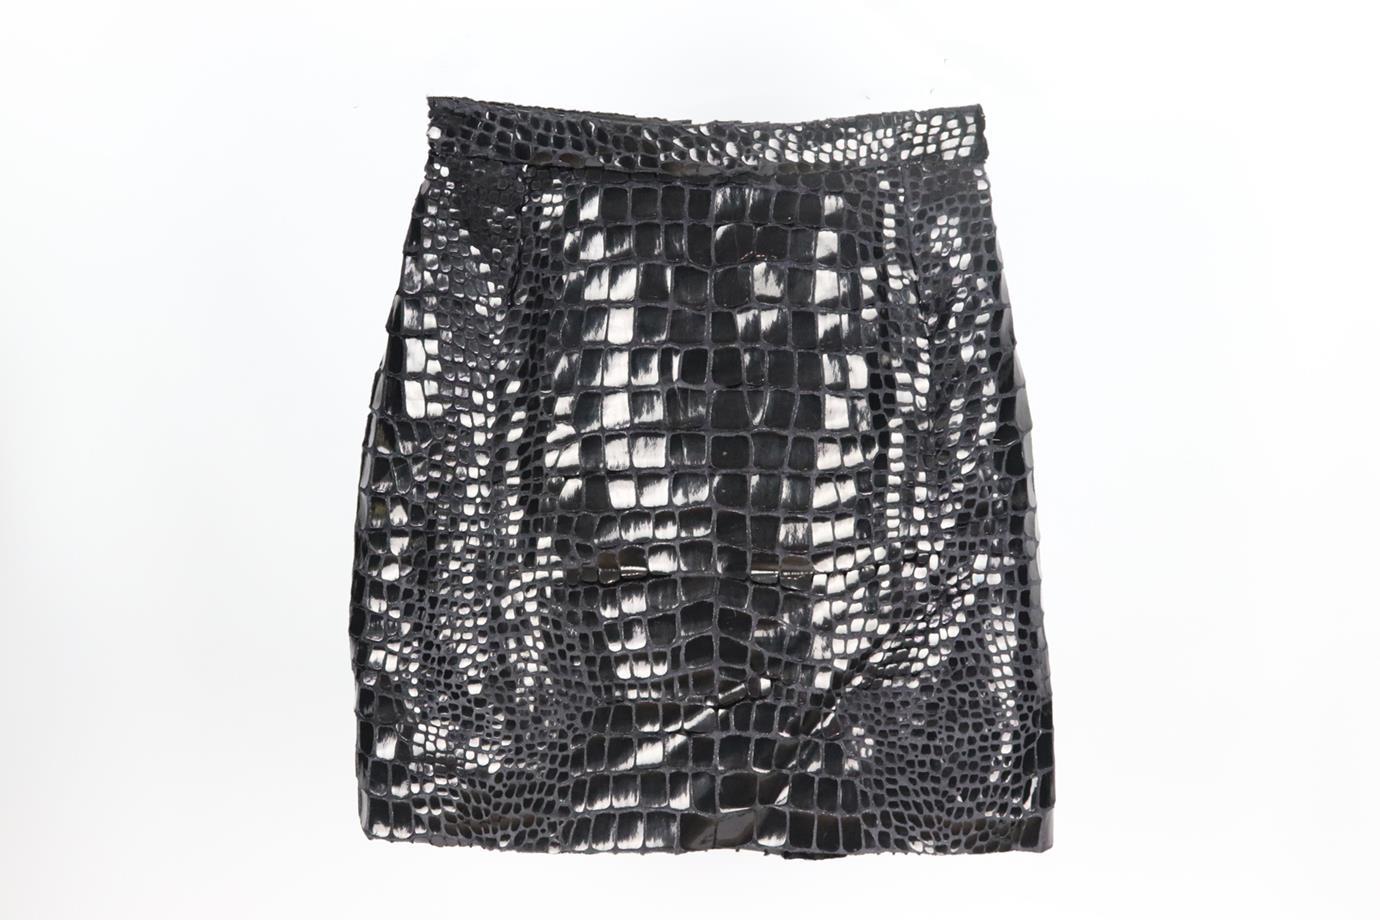 Saint Laurent croc effect vinyl and velvet mini skirt. Black. Zip fastening at back. 90% Viscose, 10% silk; trimming: 61% cotton, 39% silk; lining: 100% silk. Size: FR 36 (UK 8, US 4, IT 40). Waist: 25 in. Hips: 36 in. Length: 17.5 in. Very good